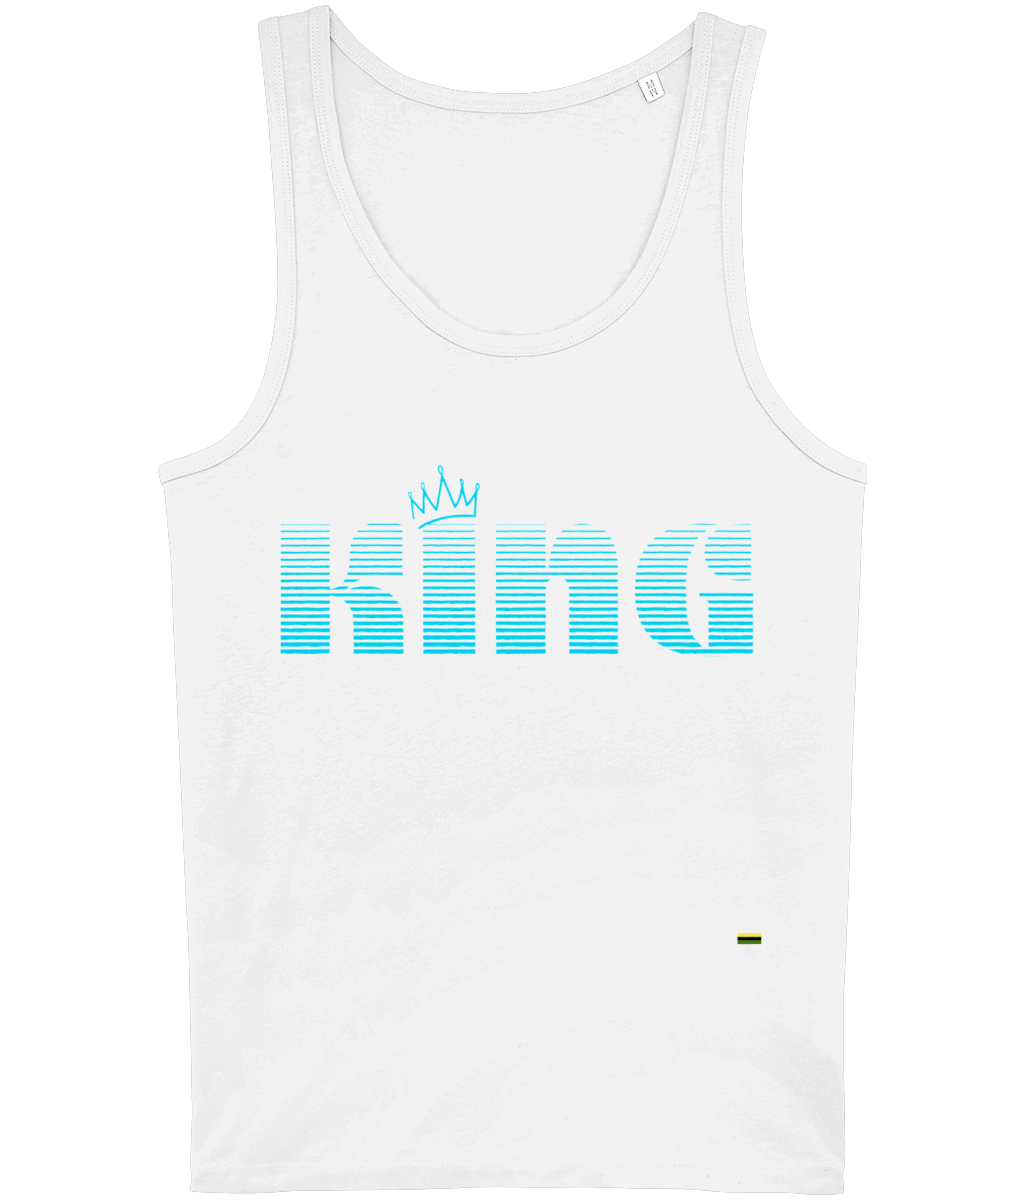 King Crown Organic Cotton Vest Top